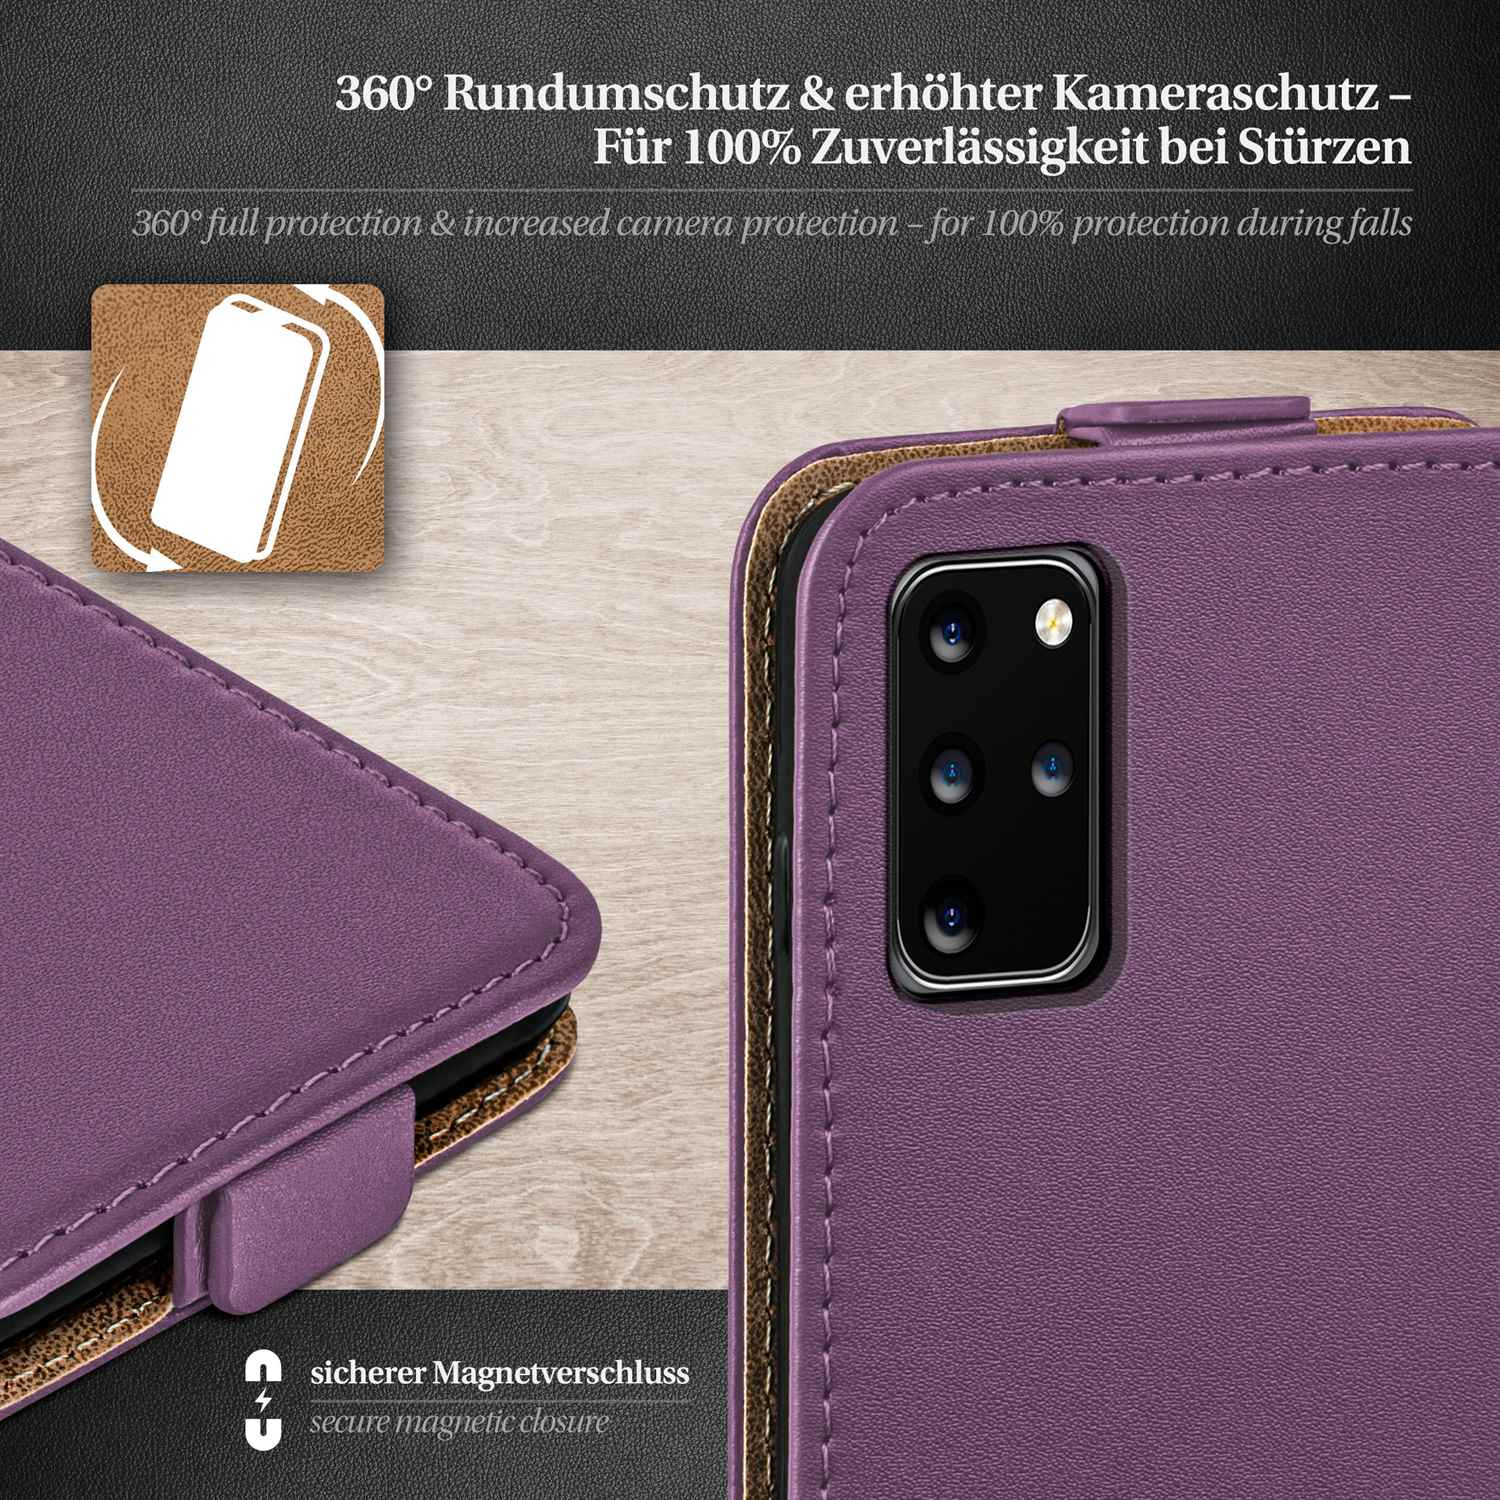 Galaxy Flip S20 Flip Samsung, MOEX Cover, Indigo-Violet Plus, Case,